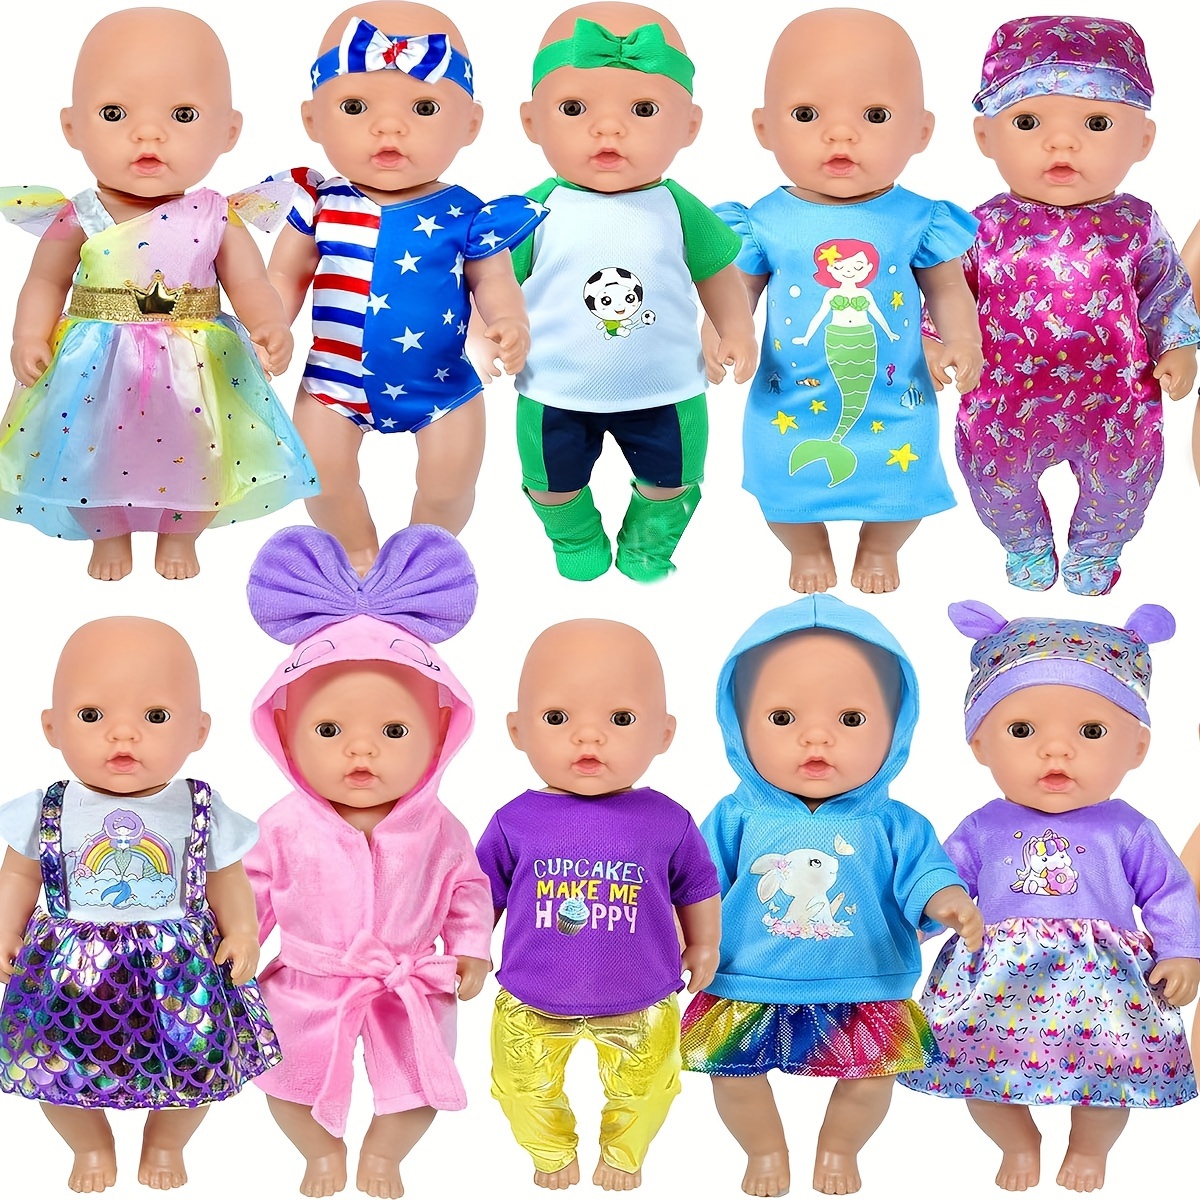 Baby Alive Dollreborn Baby Doll Clothes Set 18inch - Unisex